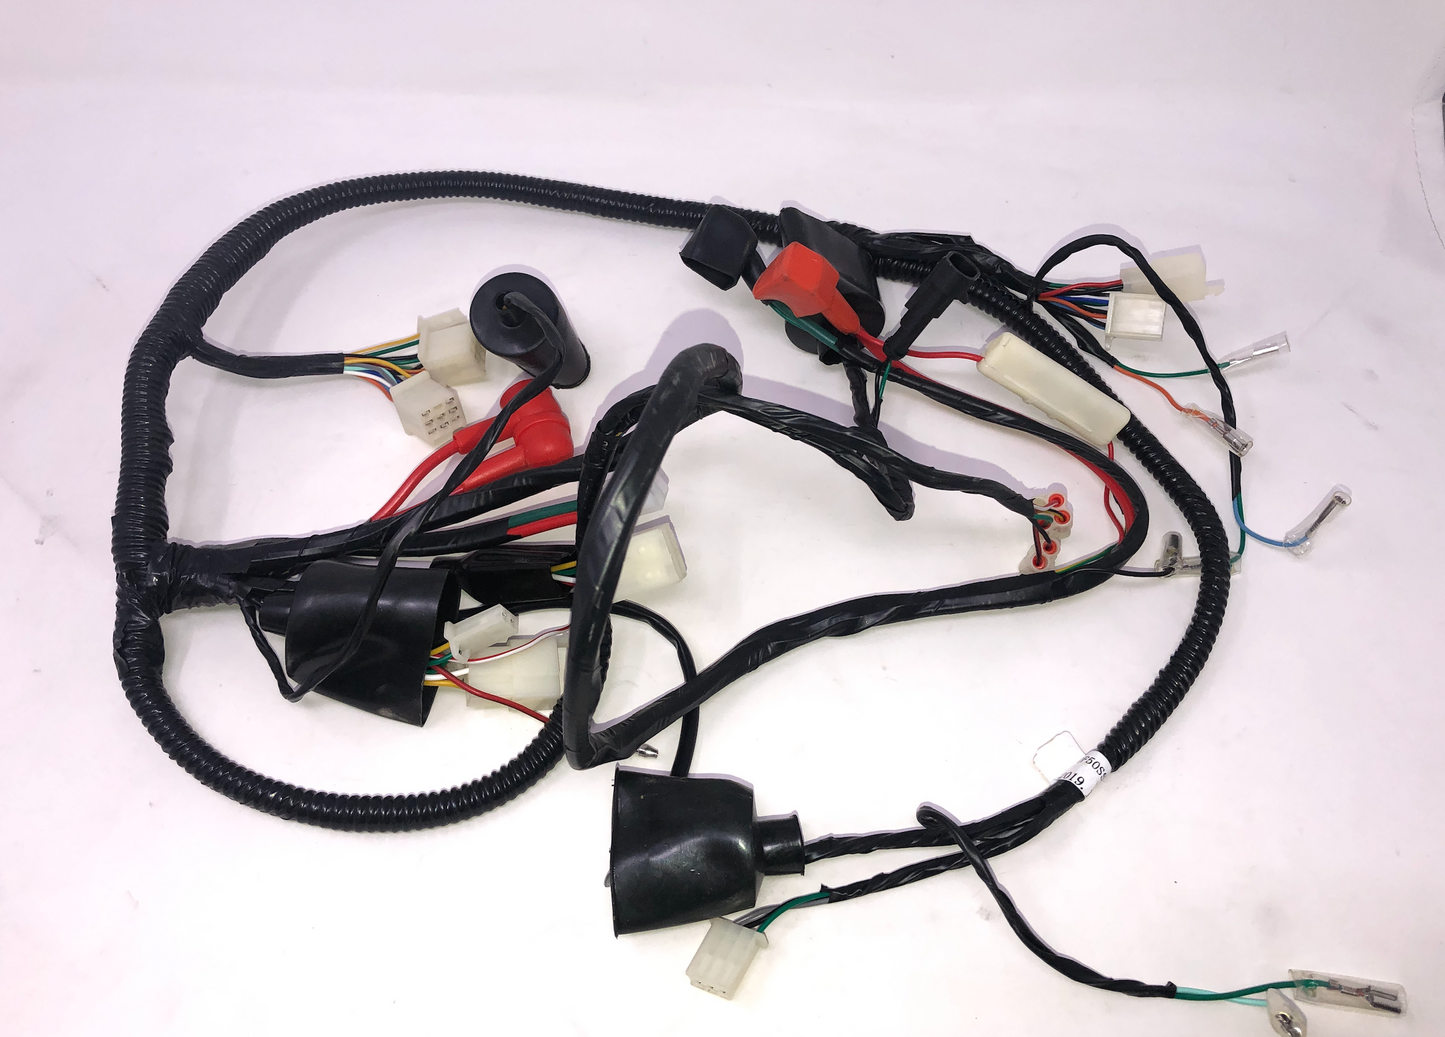 08010073 wiring harness for DF50SST. Super Pocket bike Venom X18 wiring harness